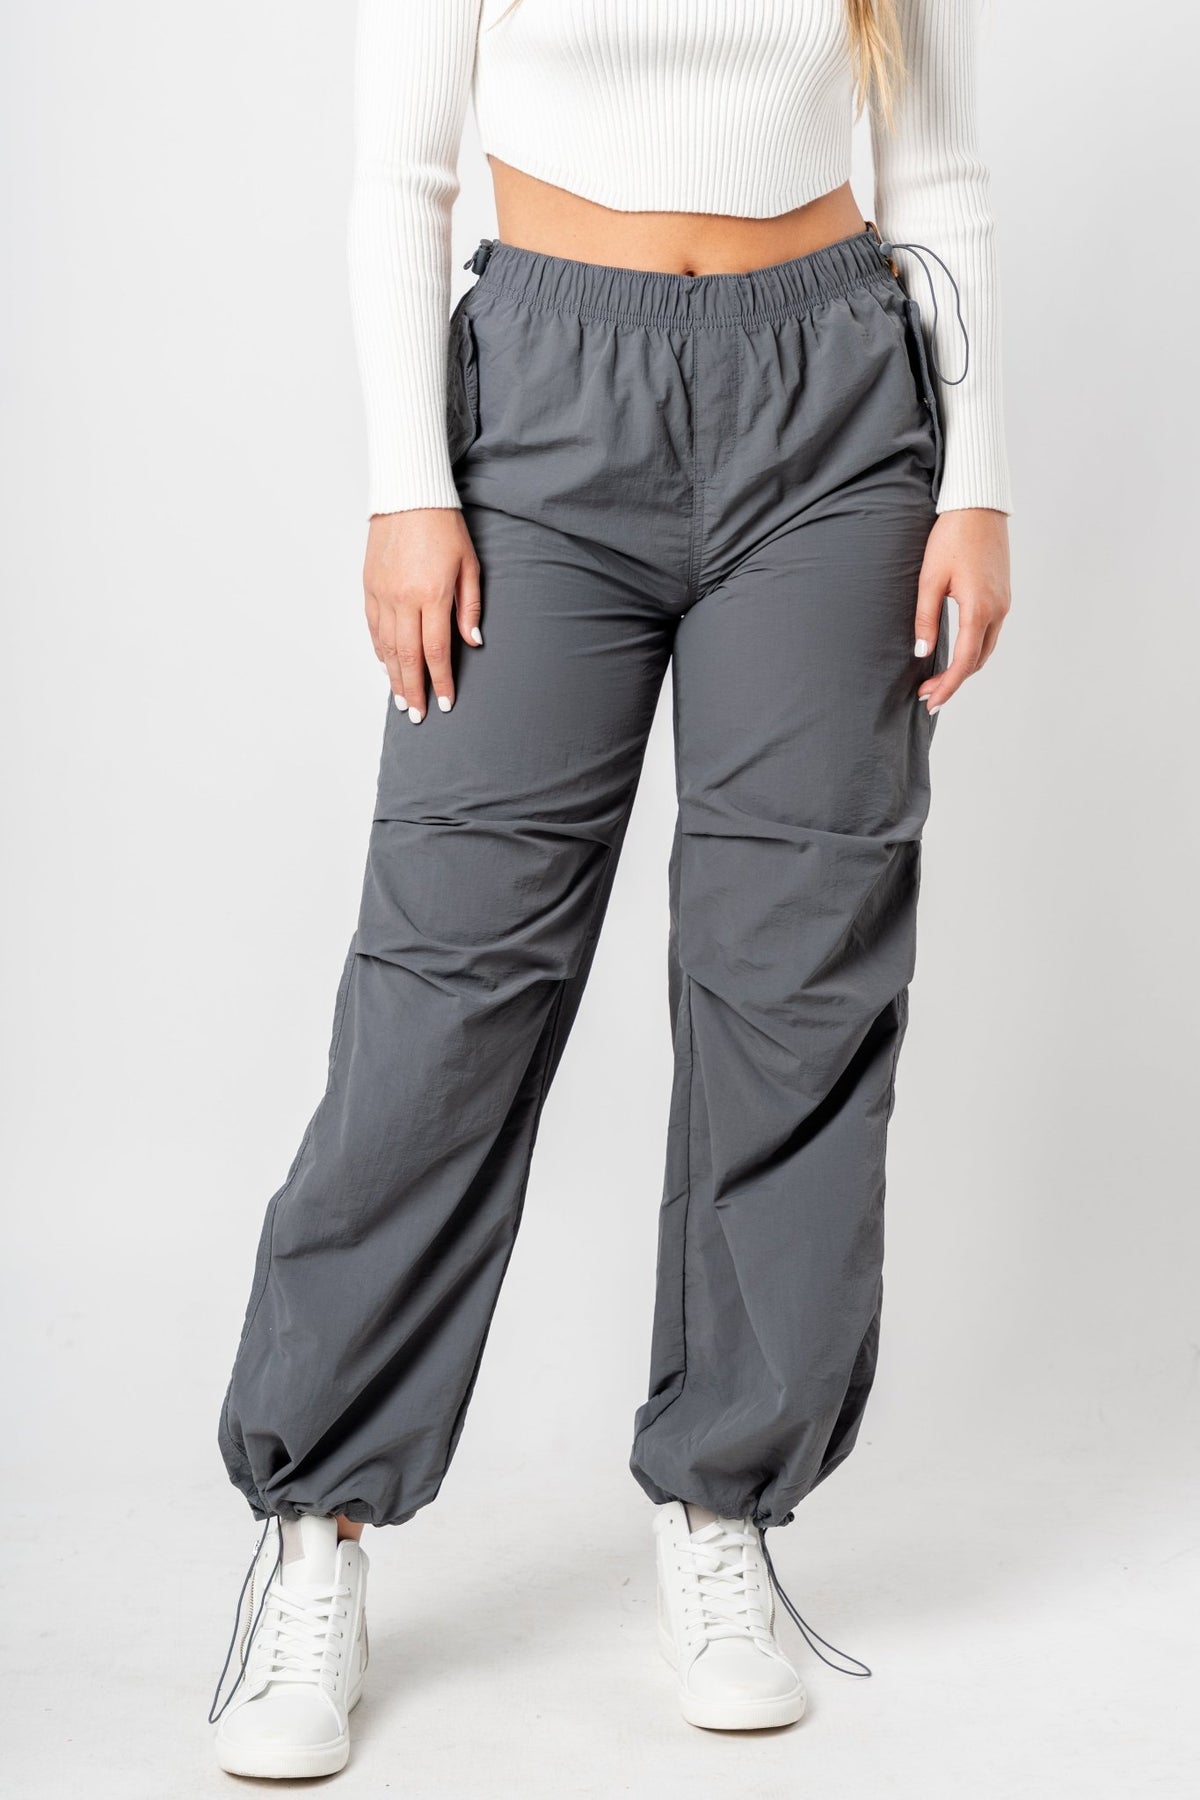 Ruched cargo pants charcoal | Lush Fashion Lounge: women's boutique pants, boutique women's pants, affordable boutique pants, women's fashion pants